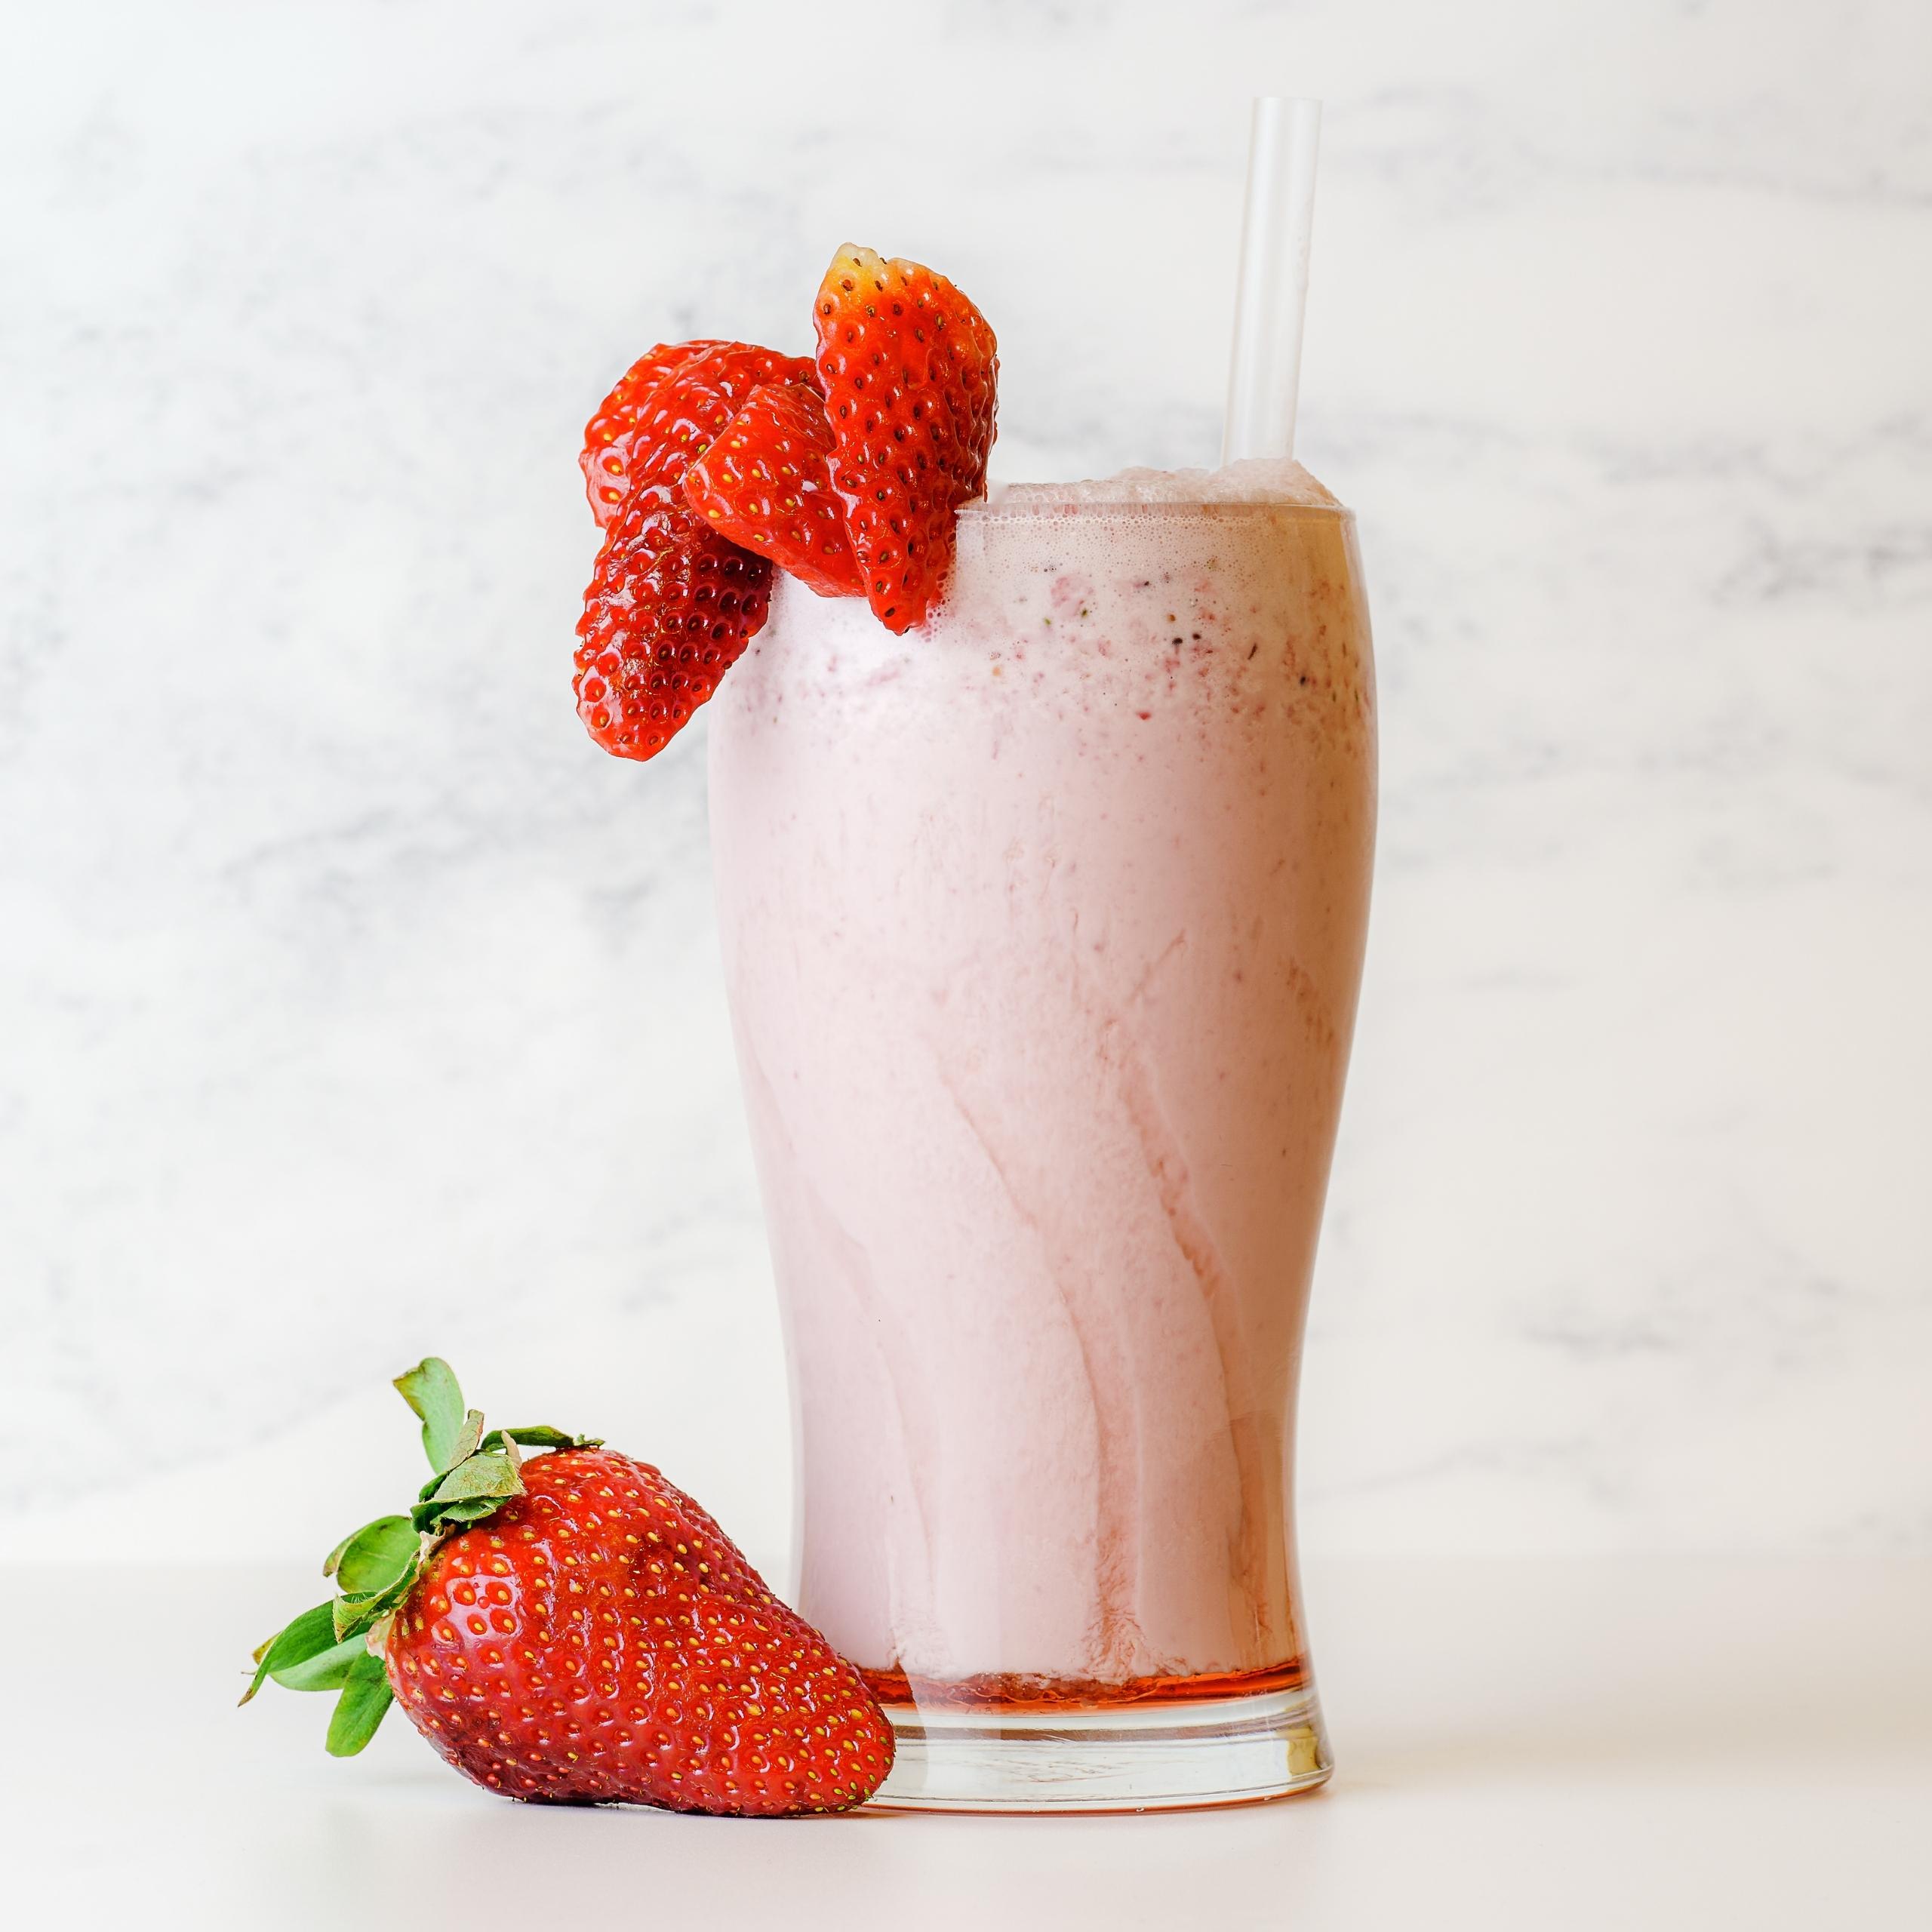 How to make a strawberry milkshake